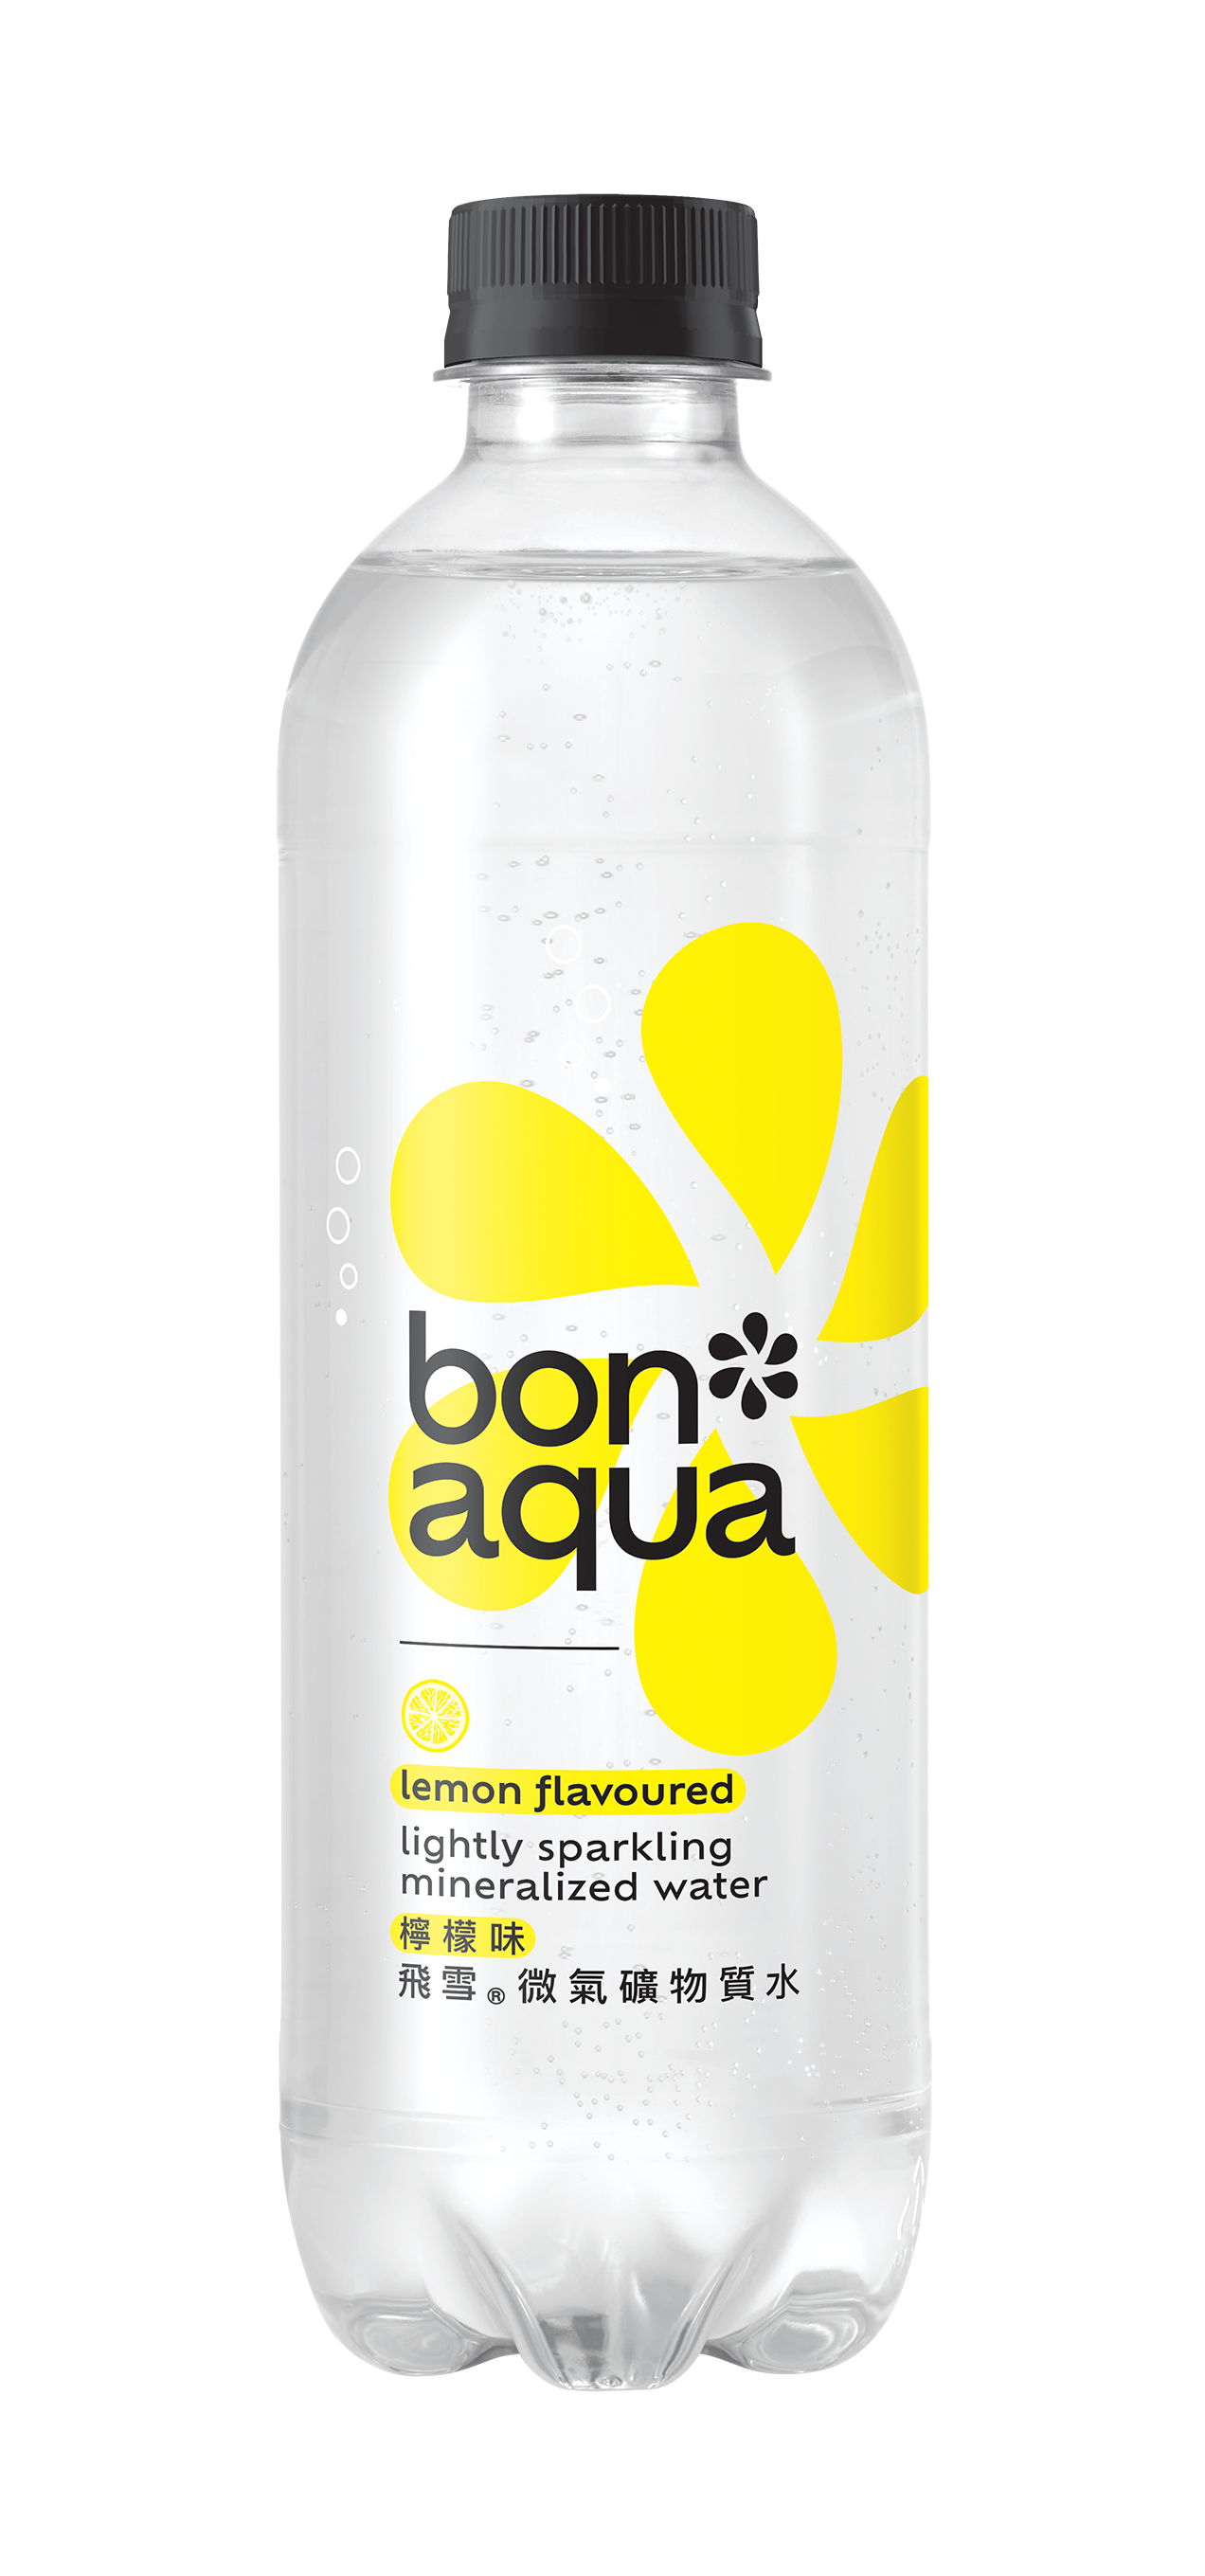 Bonaqua® Lightly Sparkling Mineralized Water Lemon Flavoured bottle